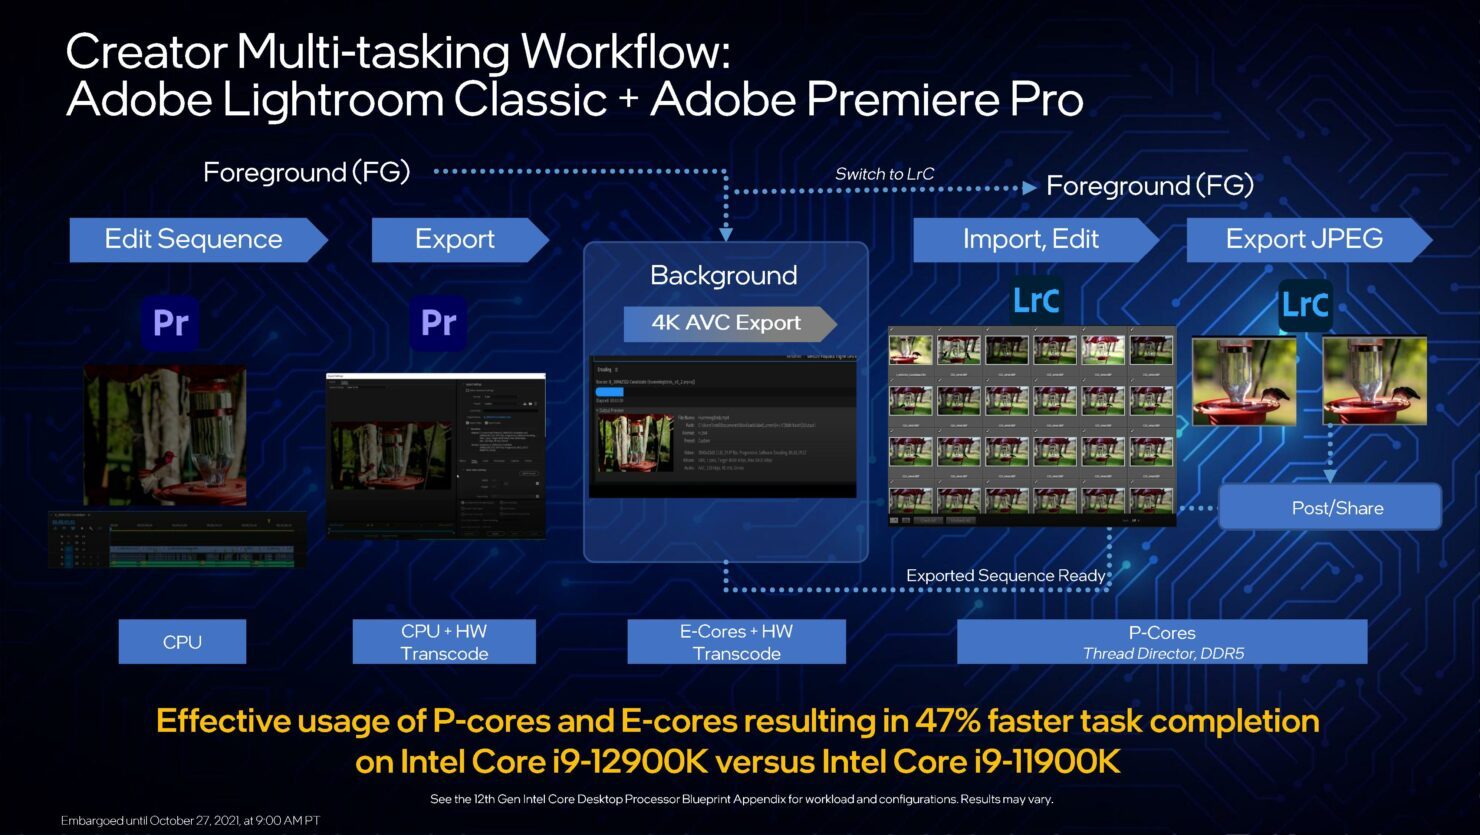 12th-gen-intel-core-desktop-processors-blueprint-presentation-embargoed-until-oct-27-2021-at-9-00am-pt-page-032-1480x835-9543343